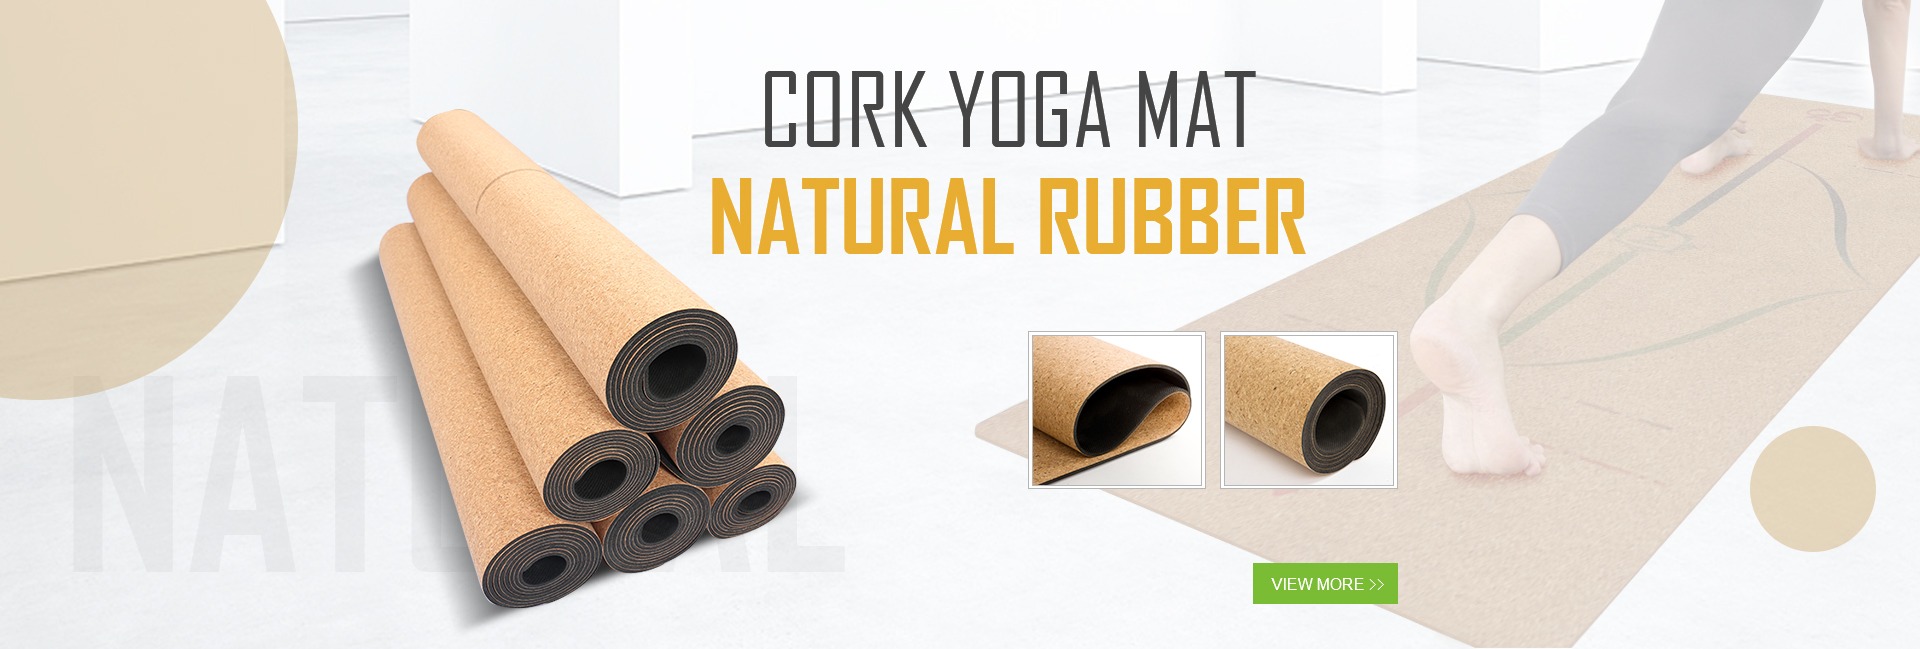 Natural rubber cork yoga mats